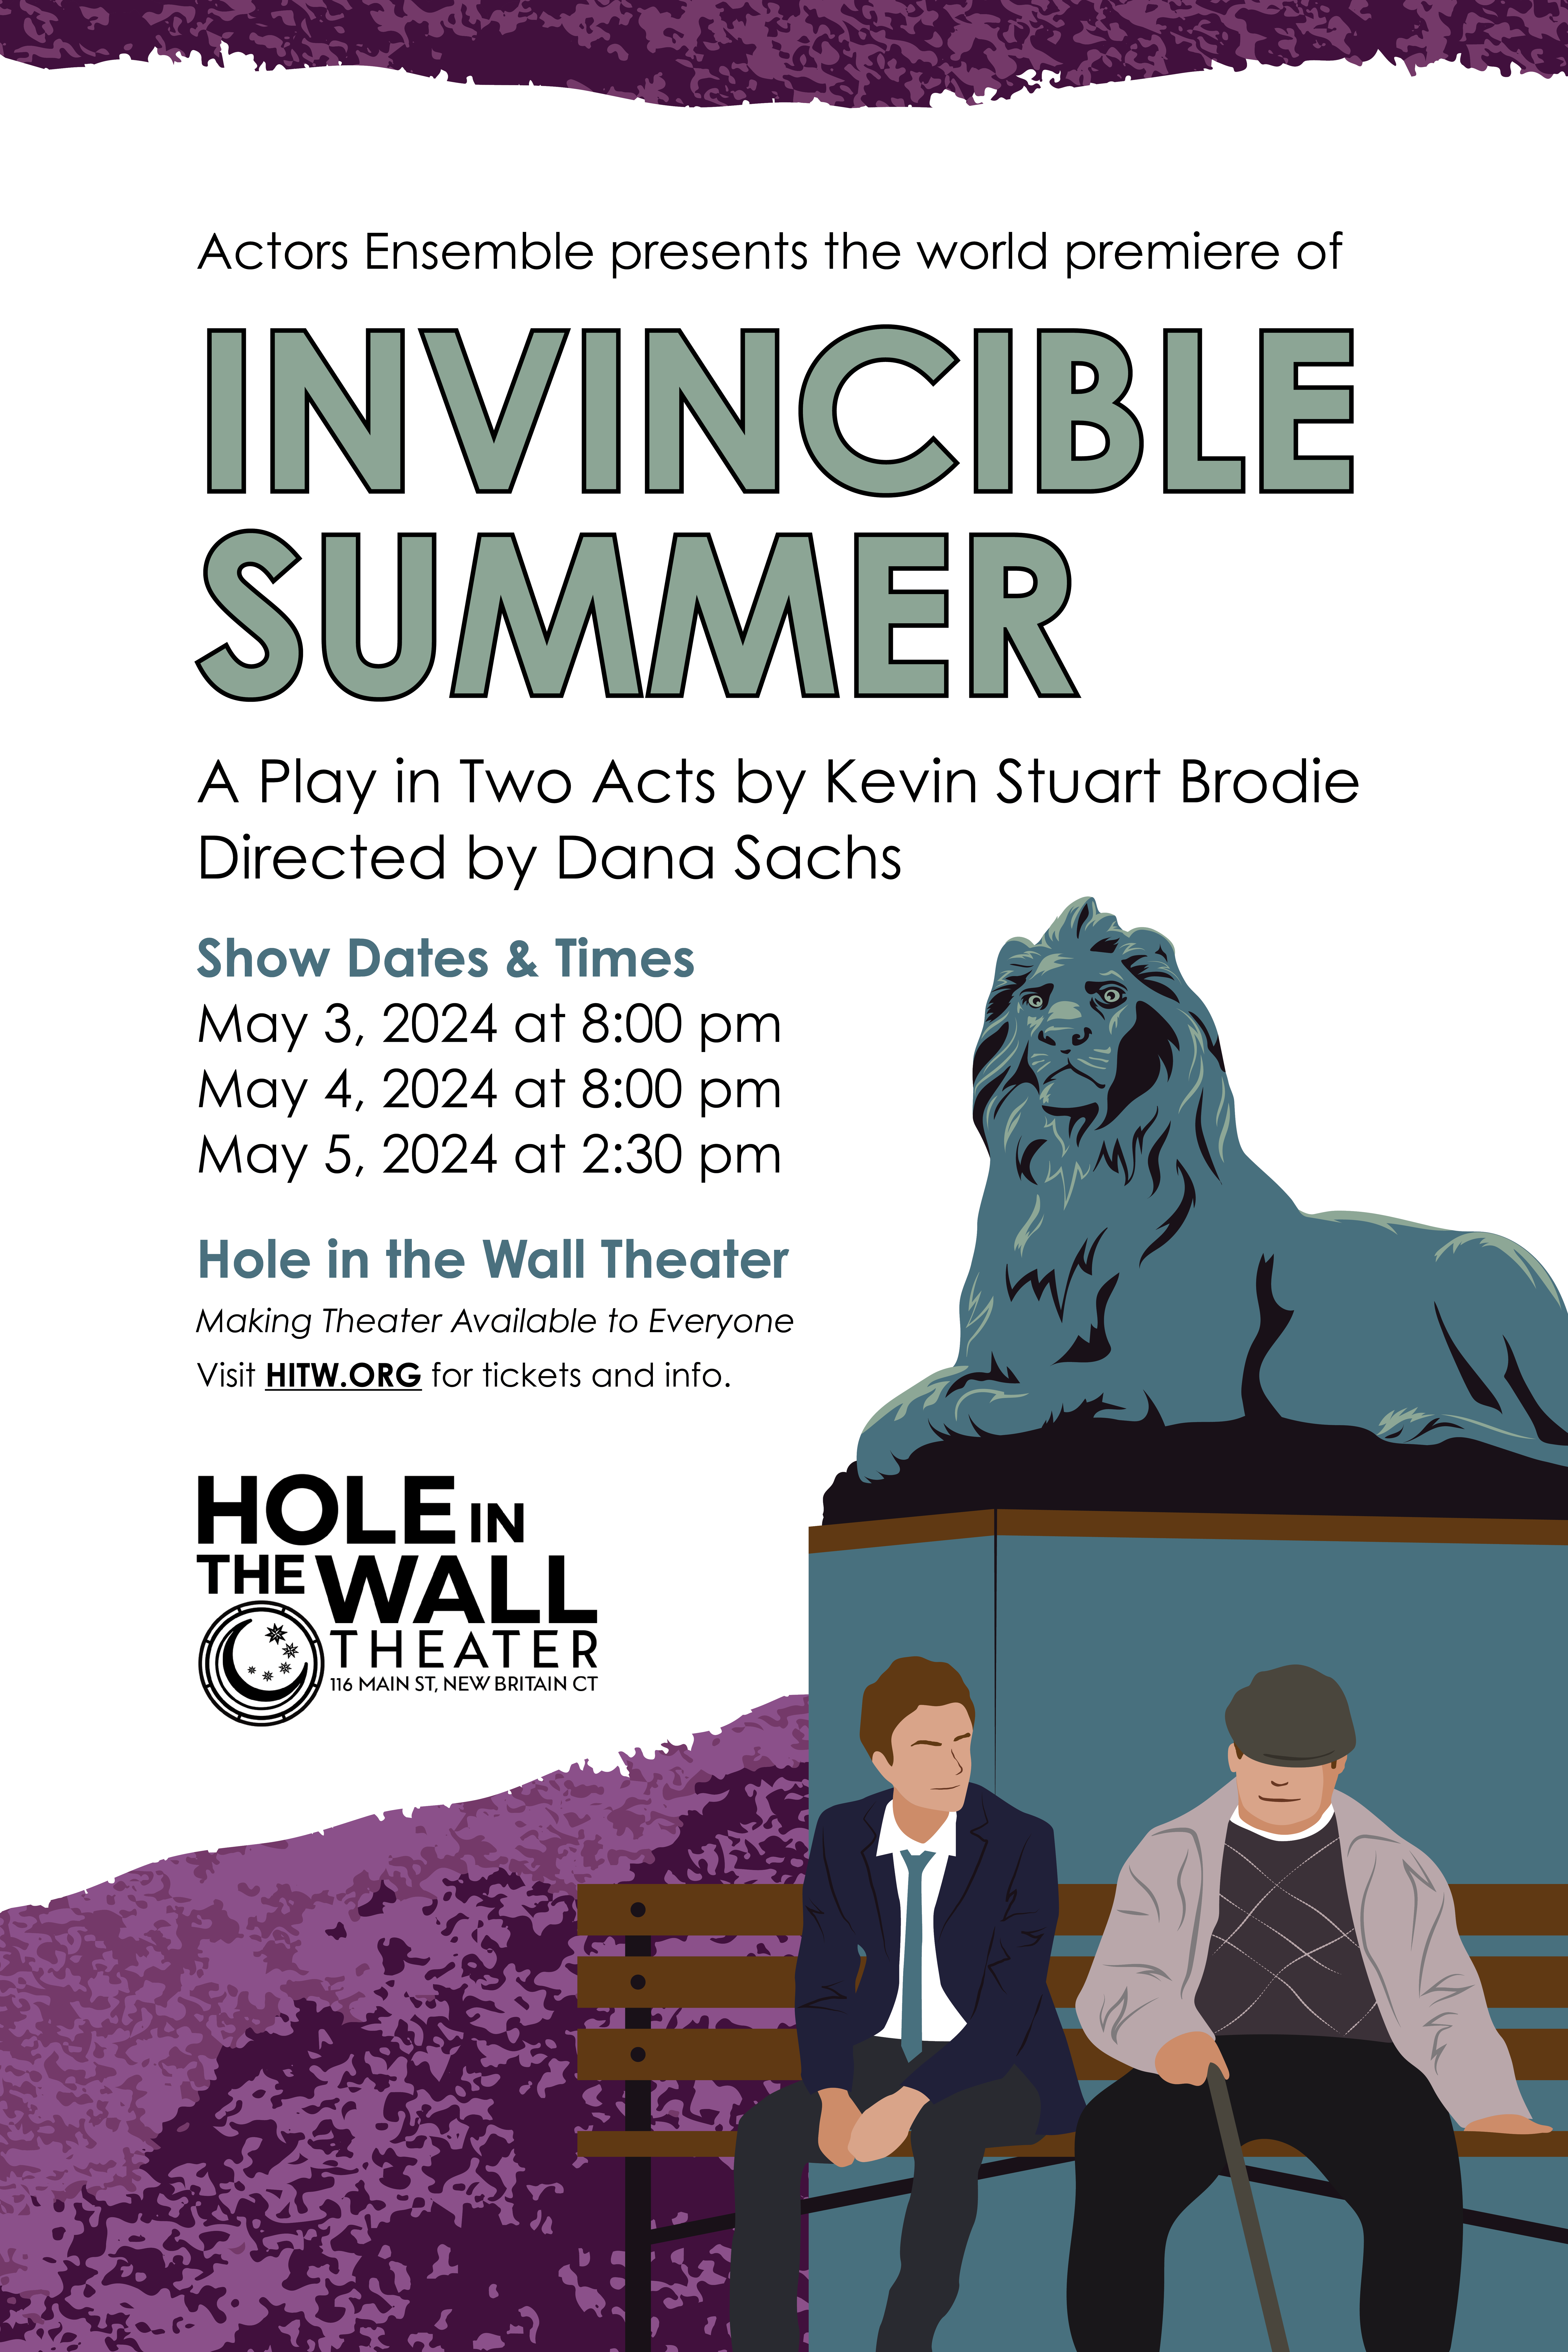 Invincible Summer – Presented by Actors Ensemble